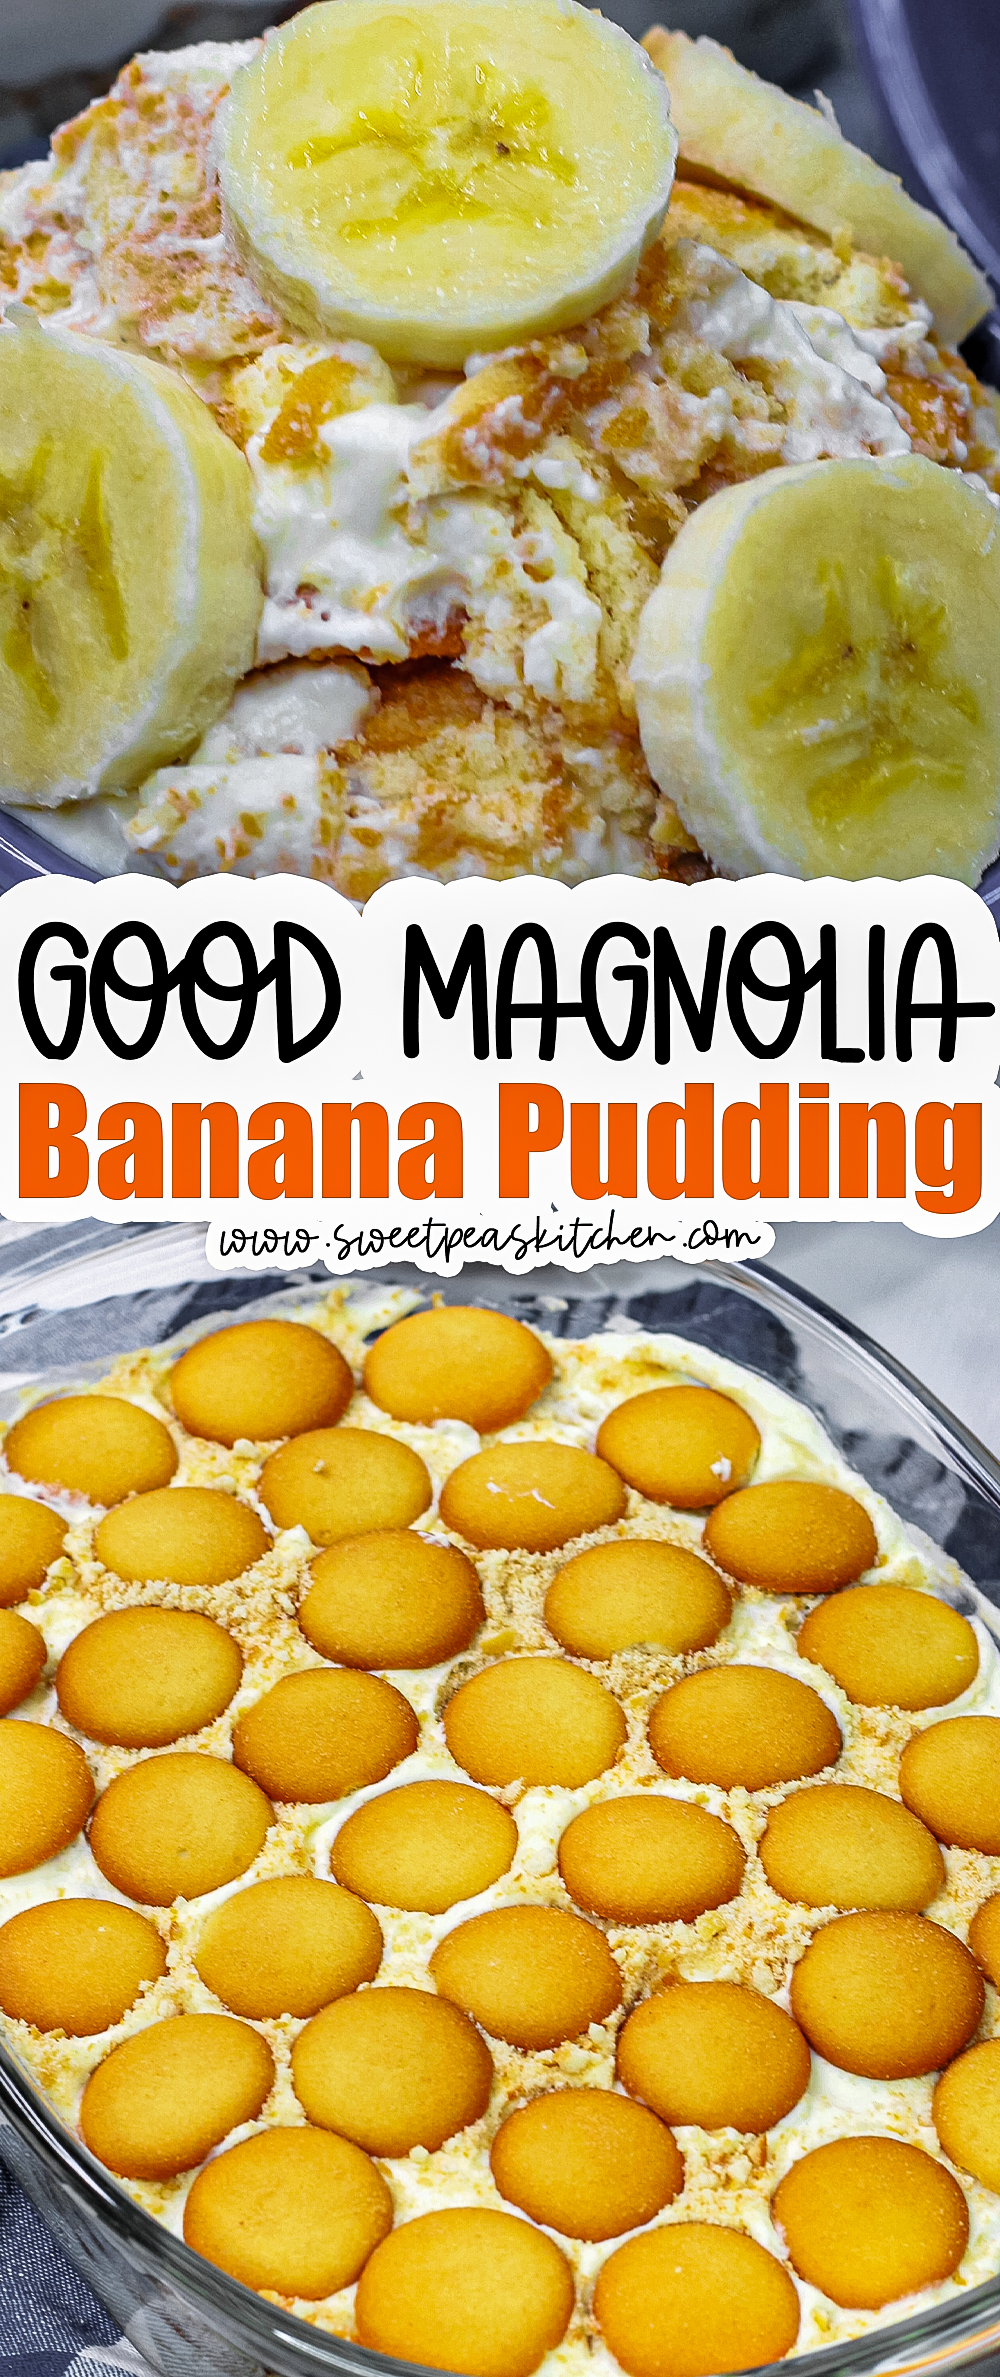 Magnolia Banana Pudding on Pinterest